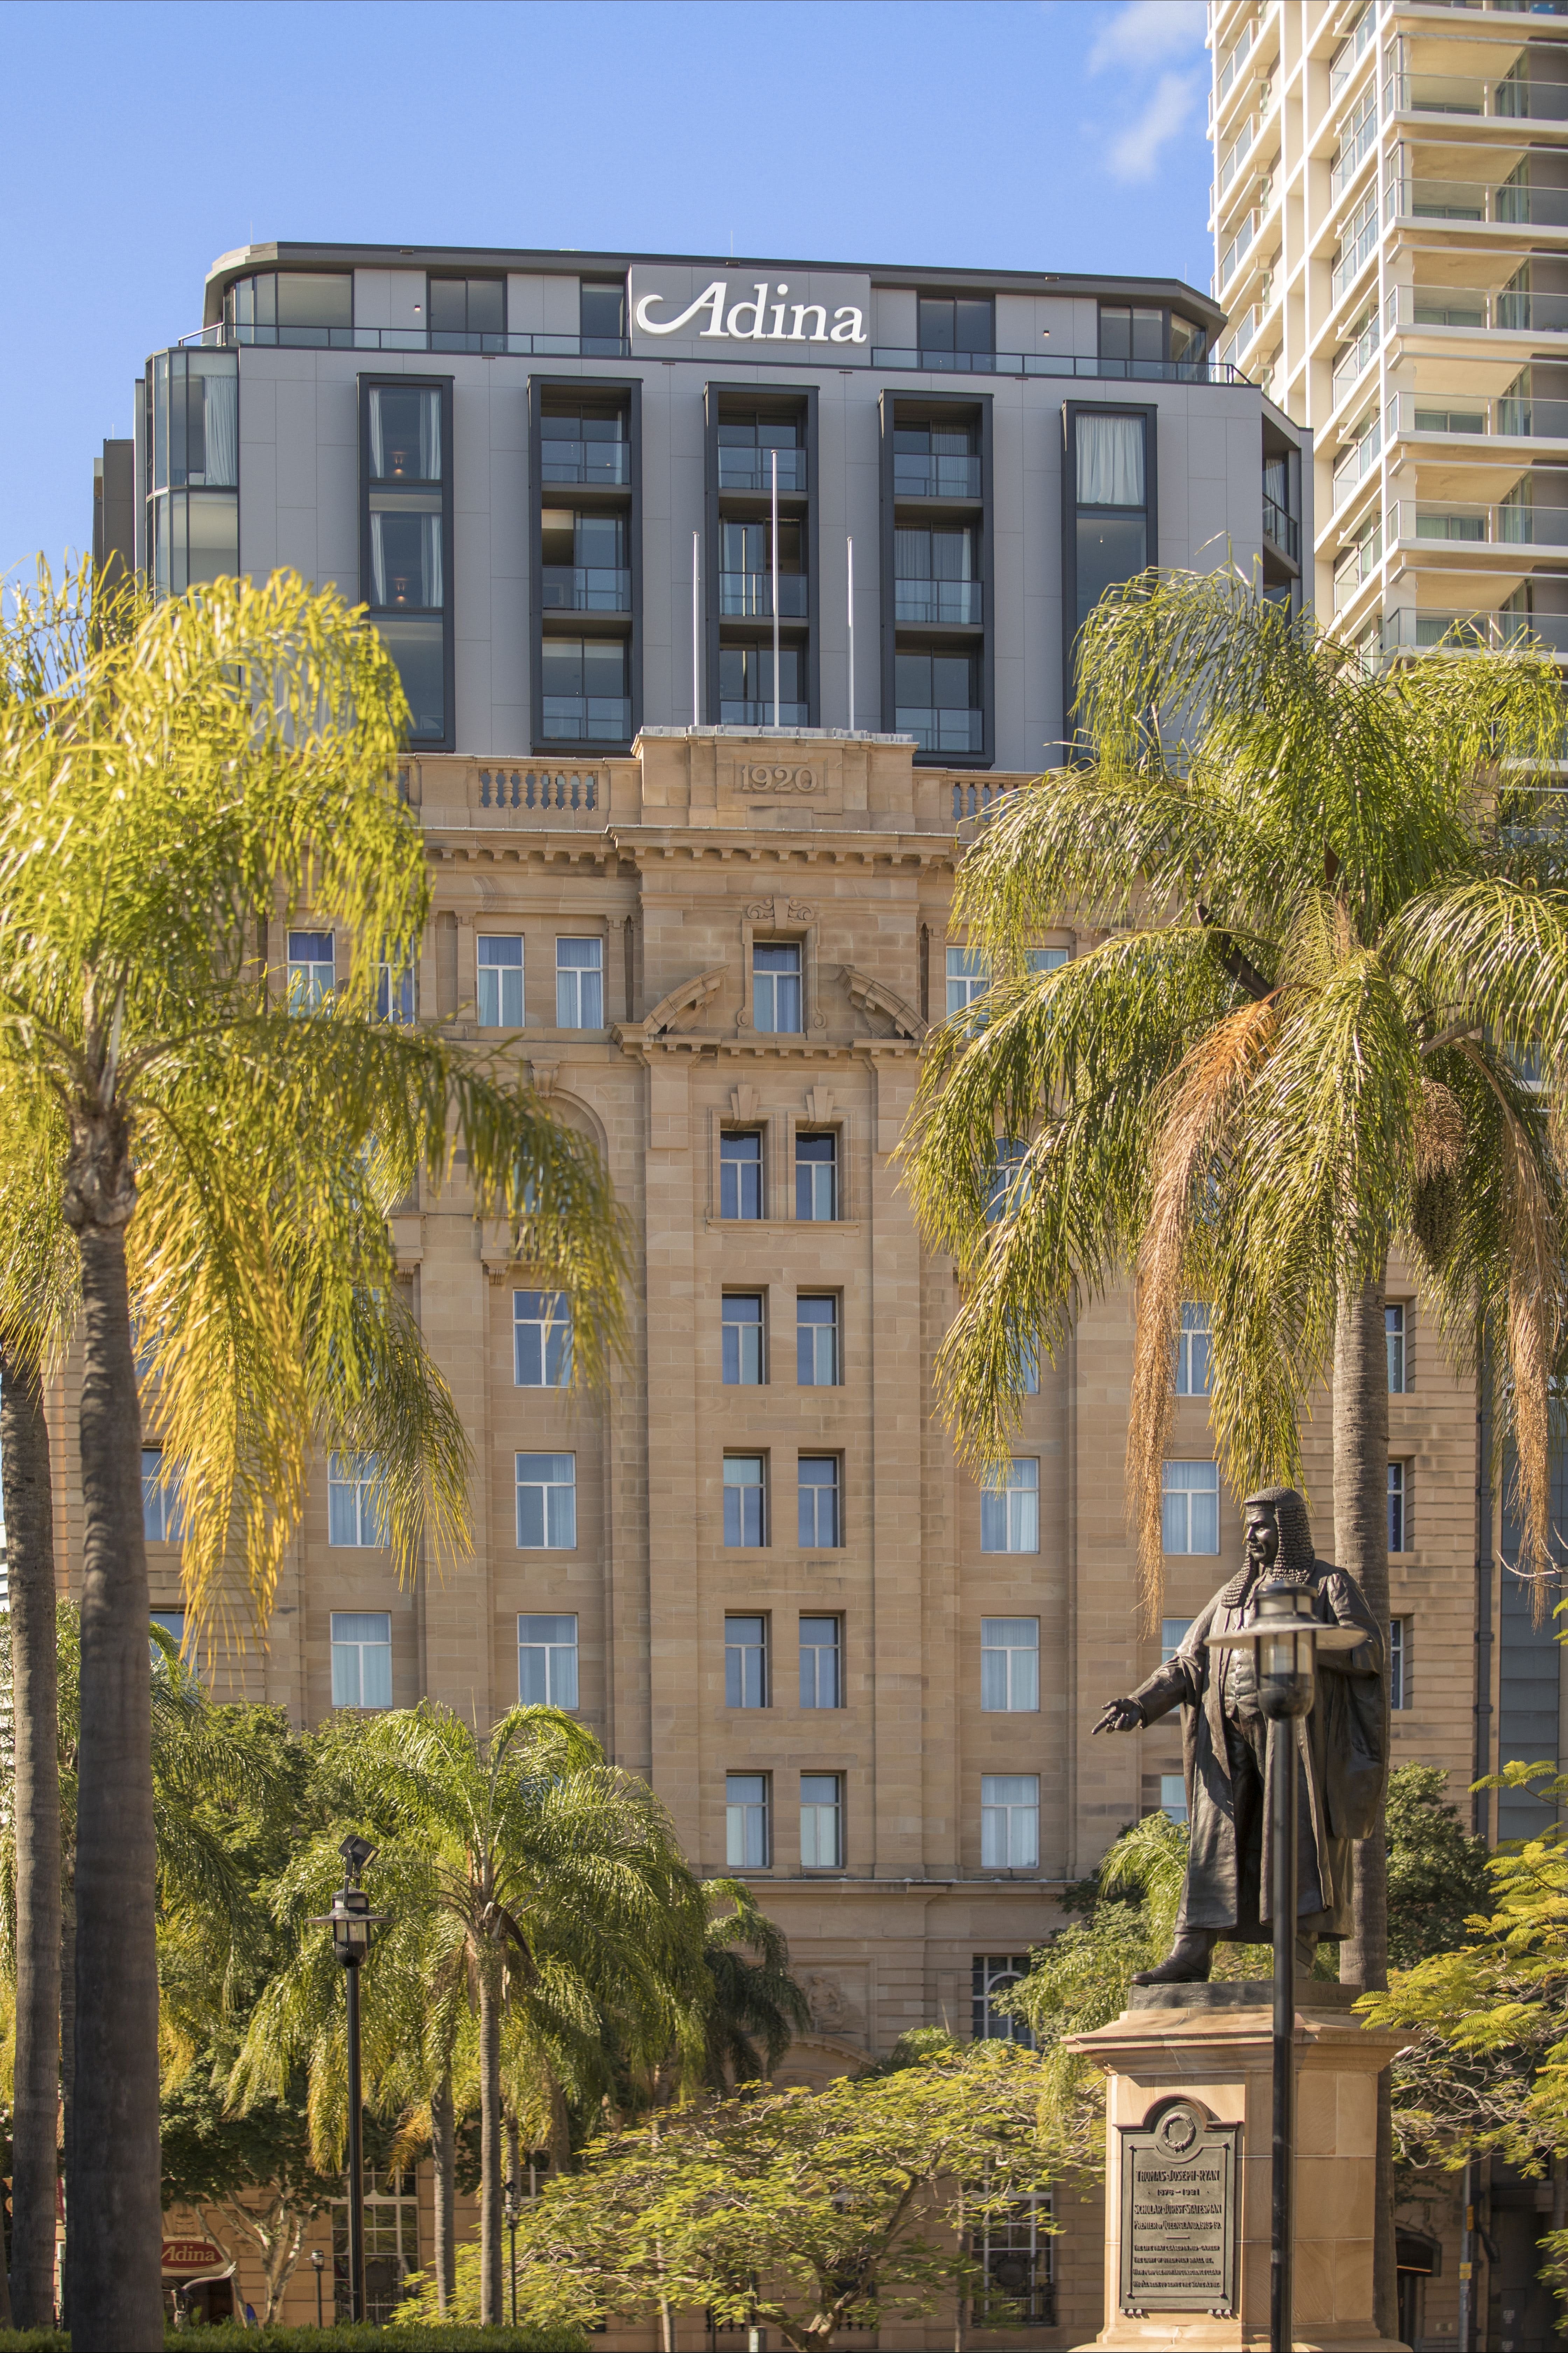 Adina Apartment Hotel Brisbane - Accommodation Bookings 0